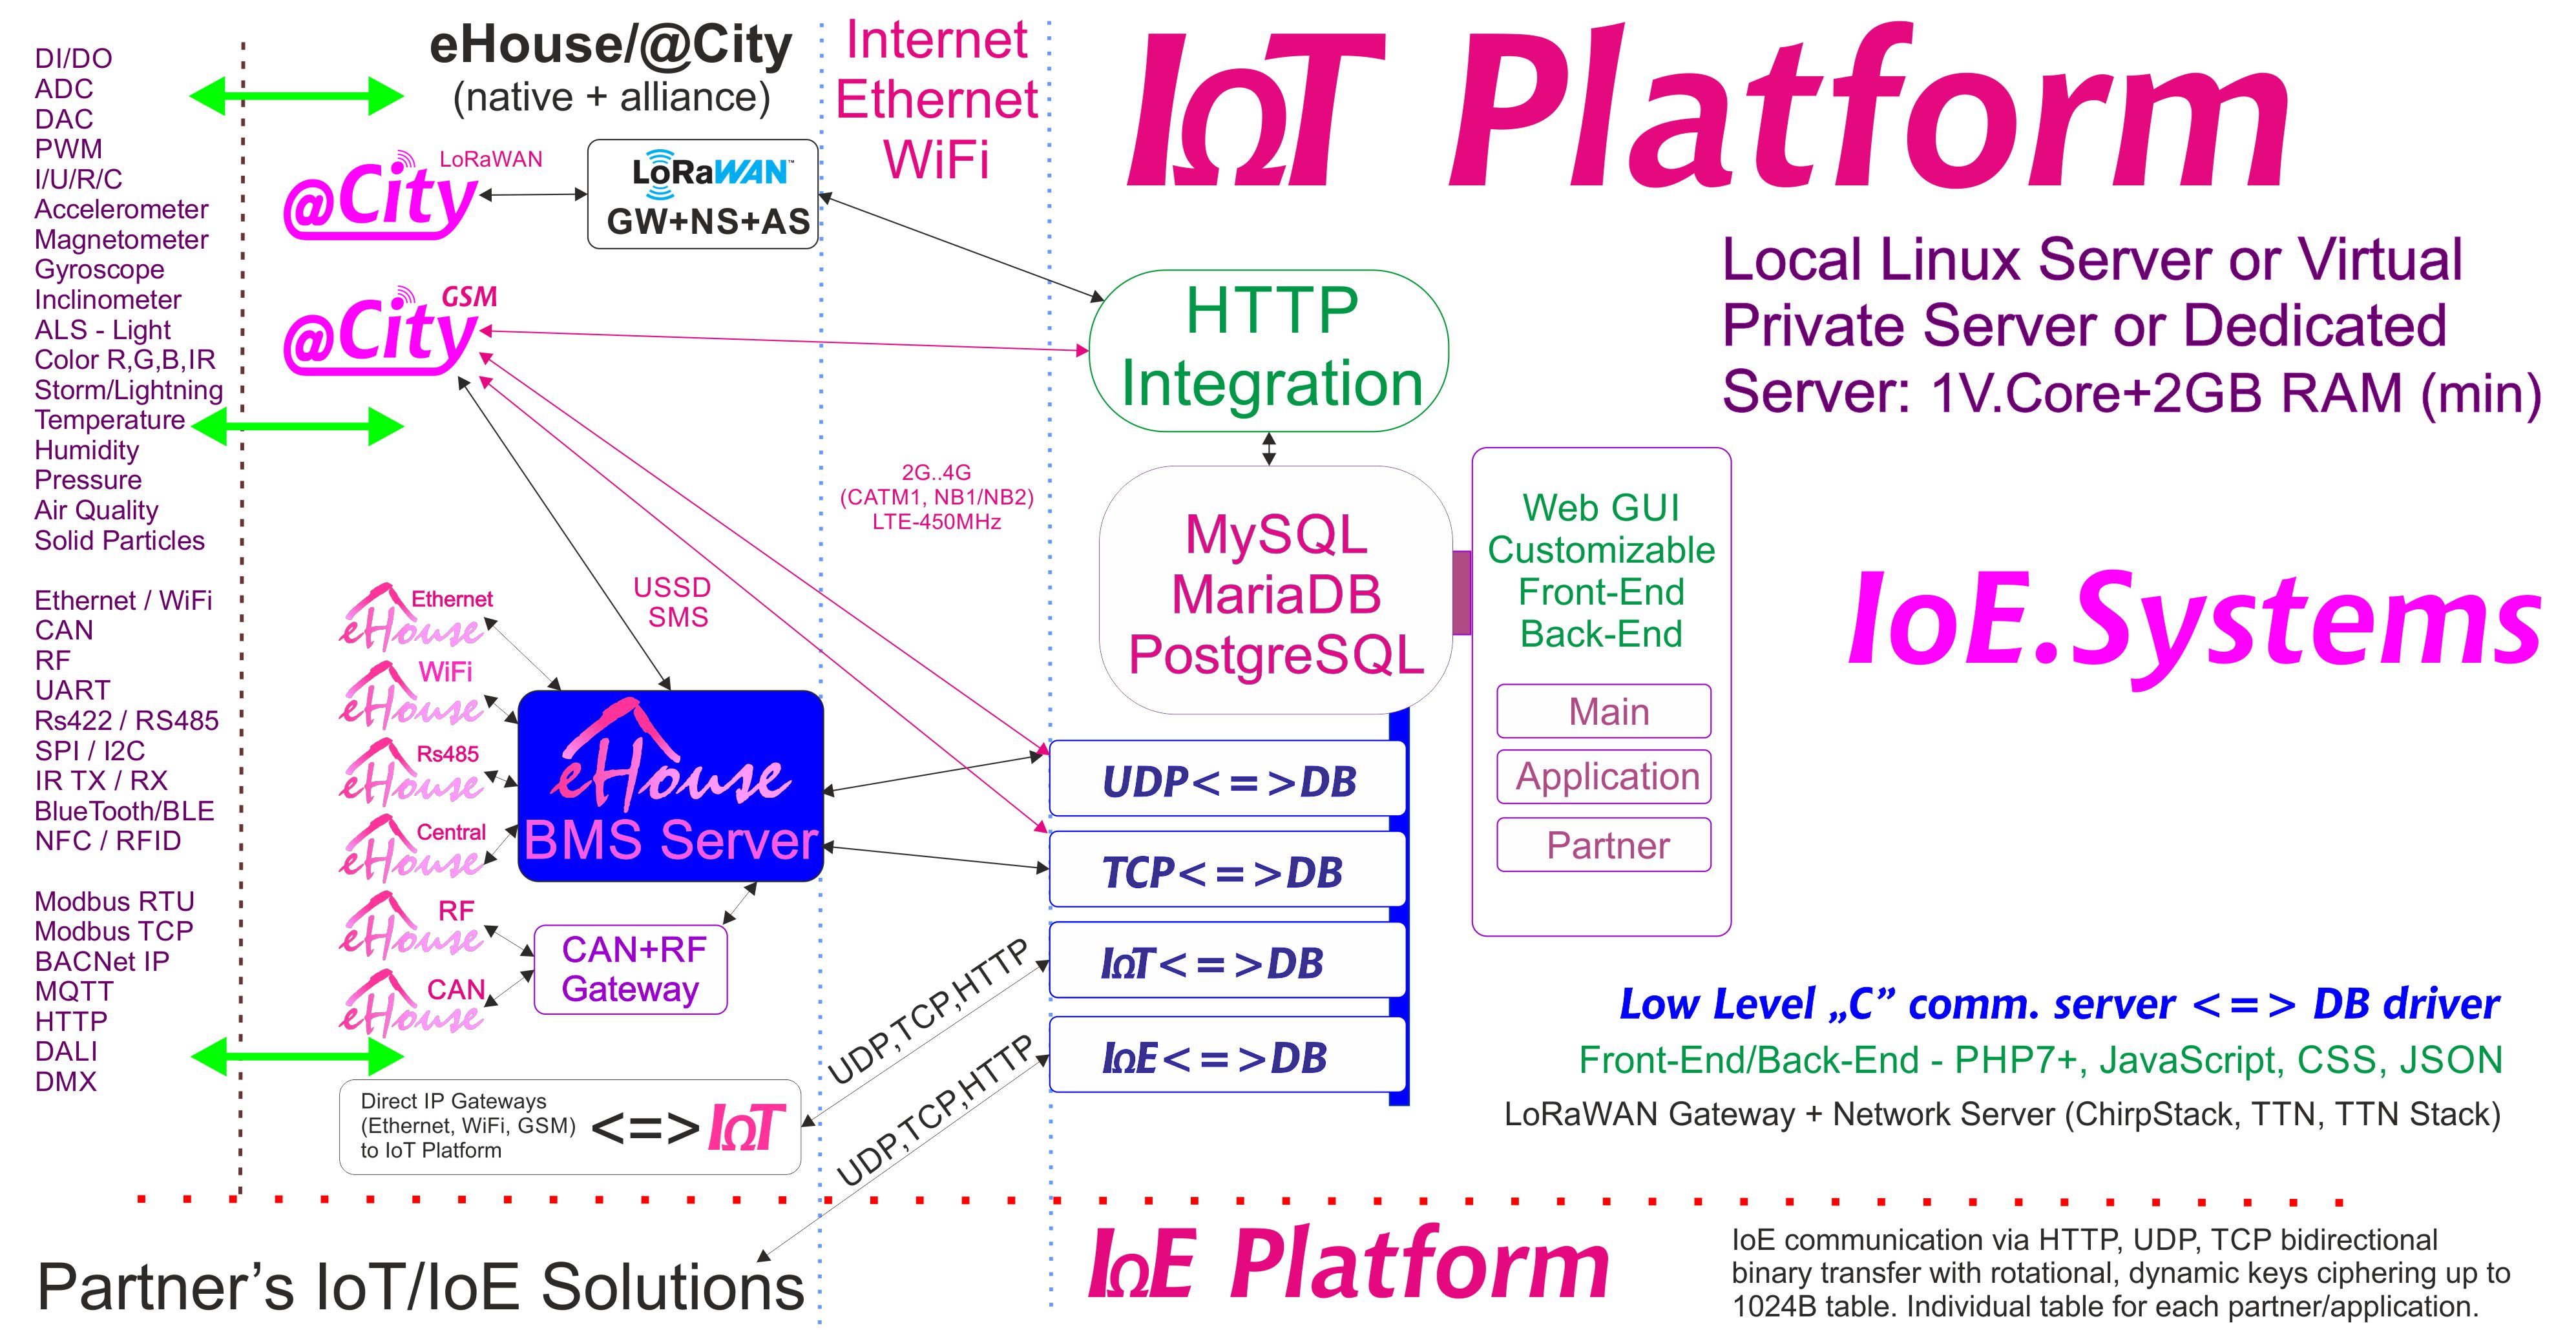 eHouse و eCity Server Software BAS و BMS و IoE و IoT Systems and Platform